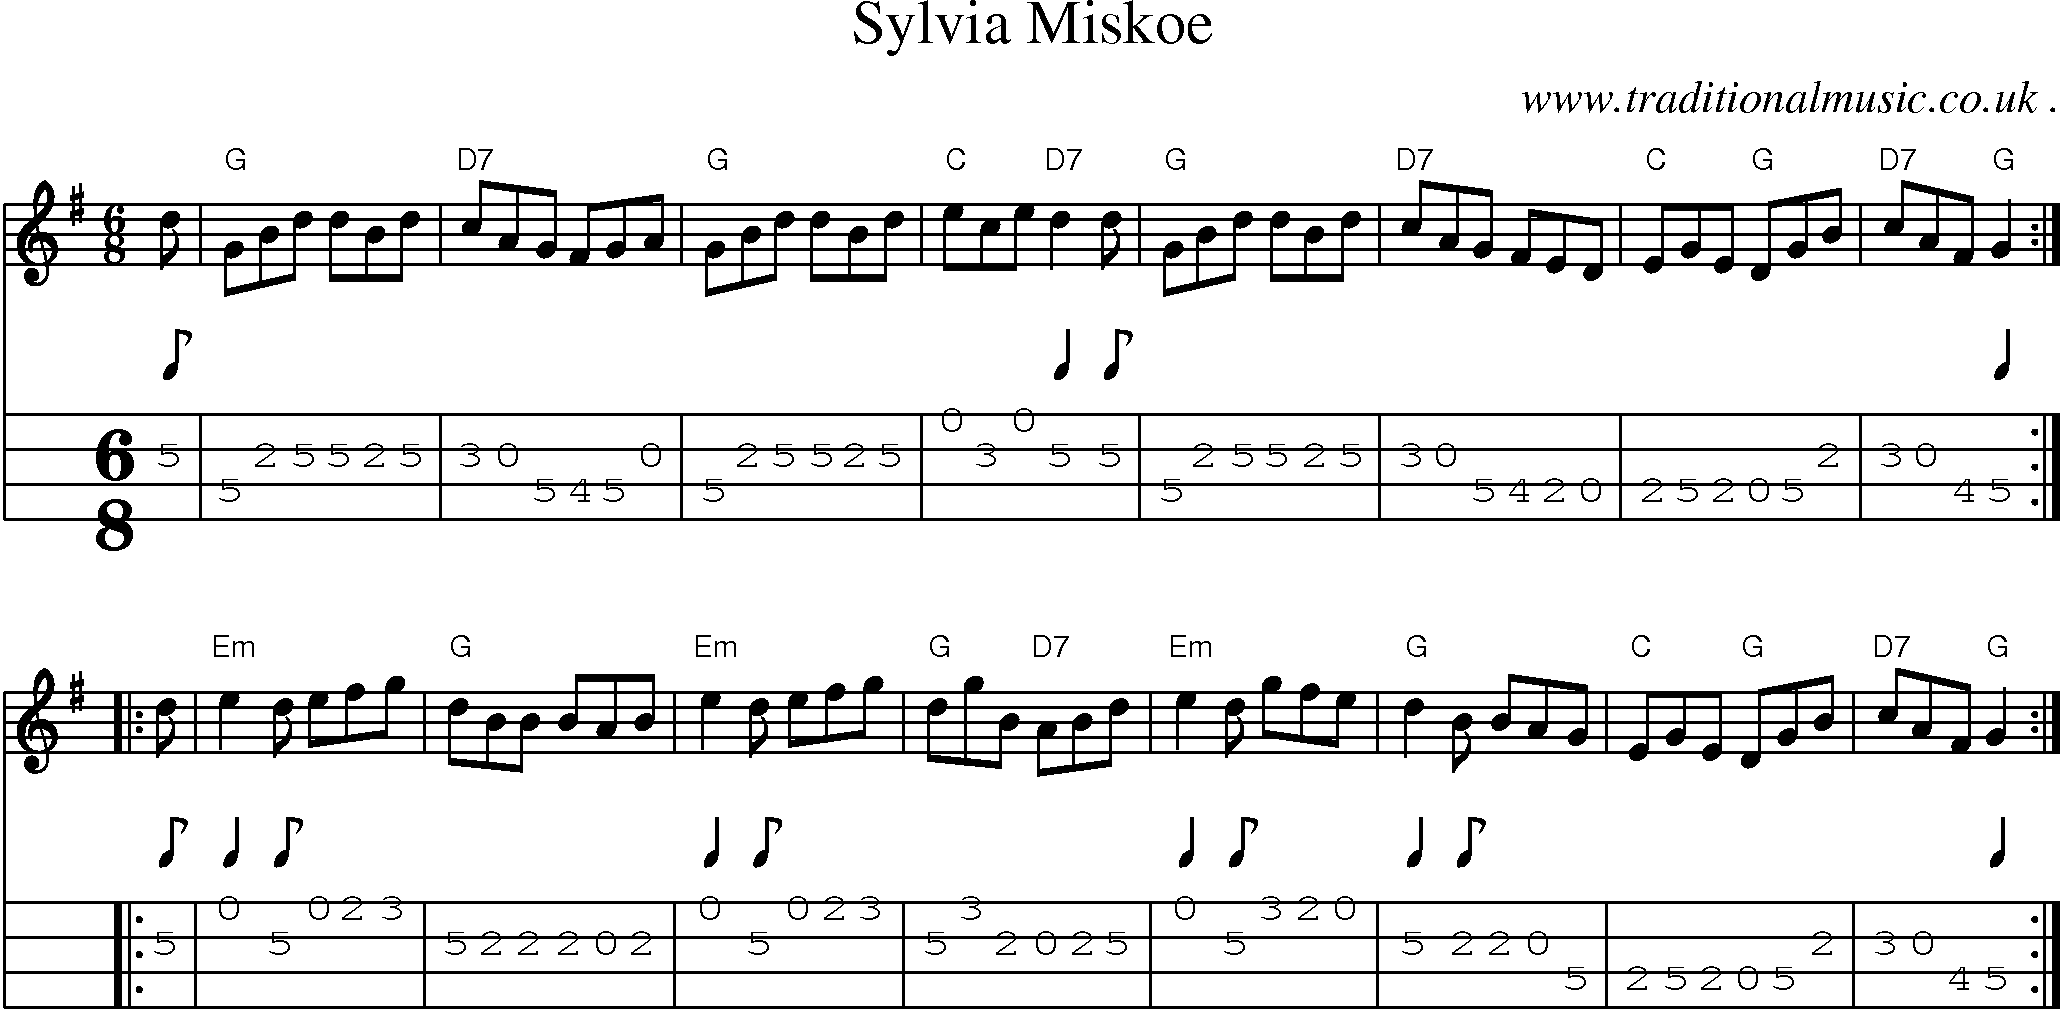 Sheet-music  score, Chords and Mandolin Tabs for Sylvia Miskoe